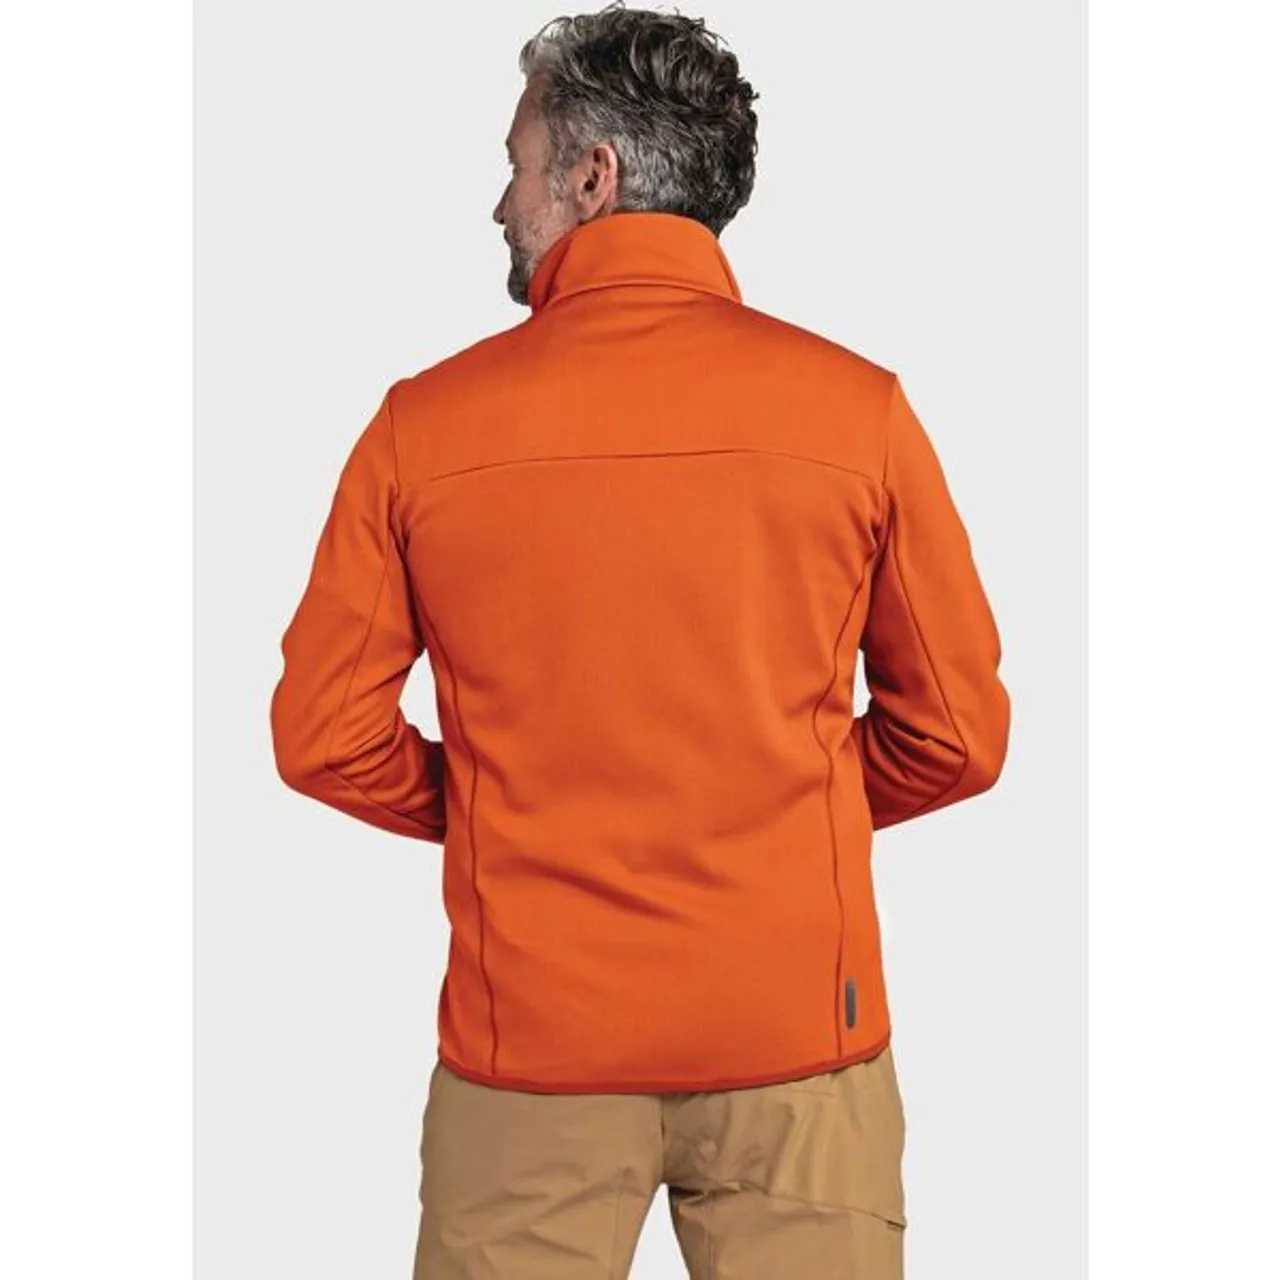 Fleecejacke SCHÖFFEL "Fleece Jacket Bleckwand M" Gr. 54, orange (5480, orange) Herren Jacken Outdoorjacken